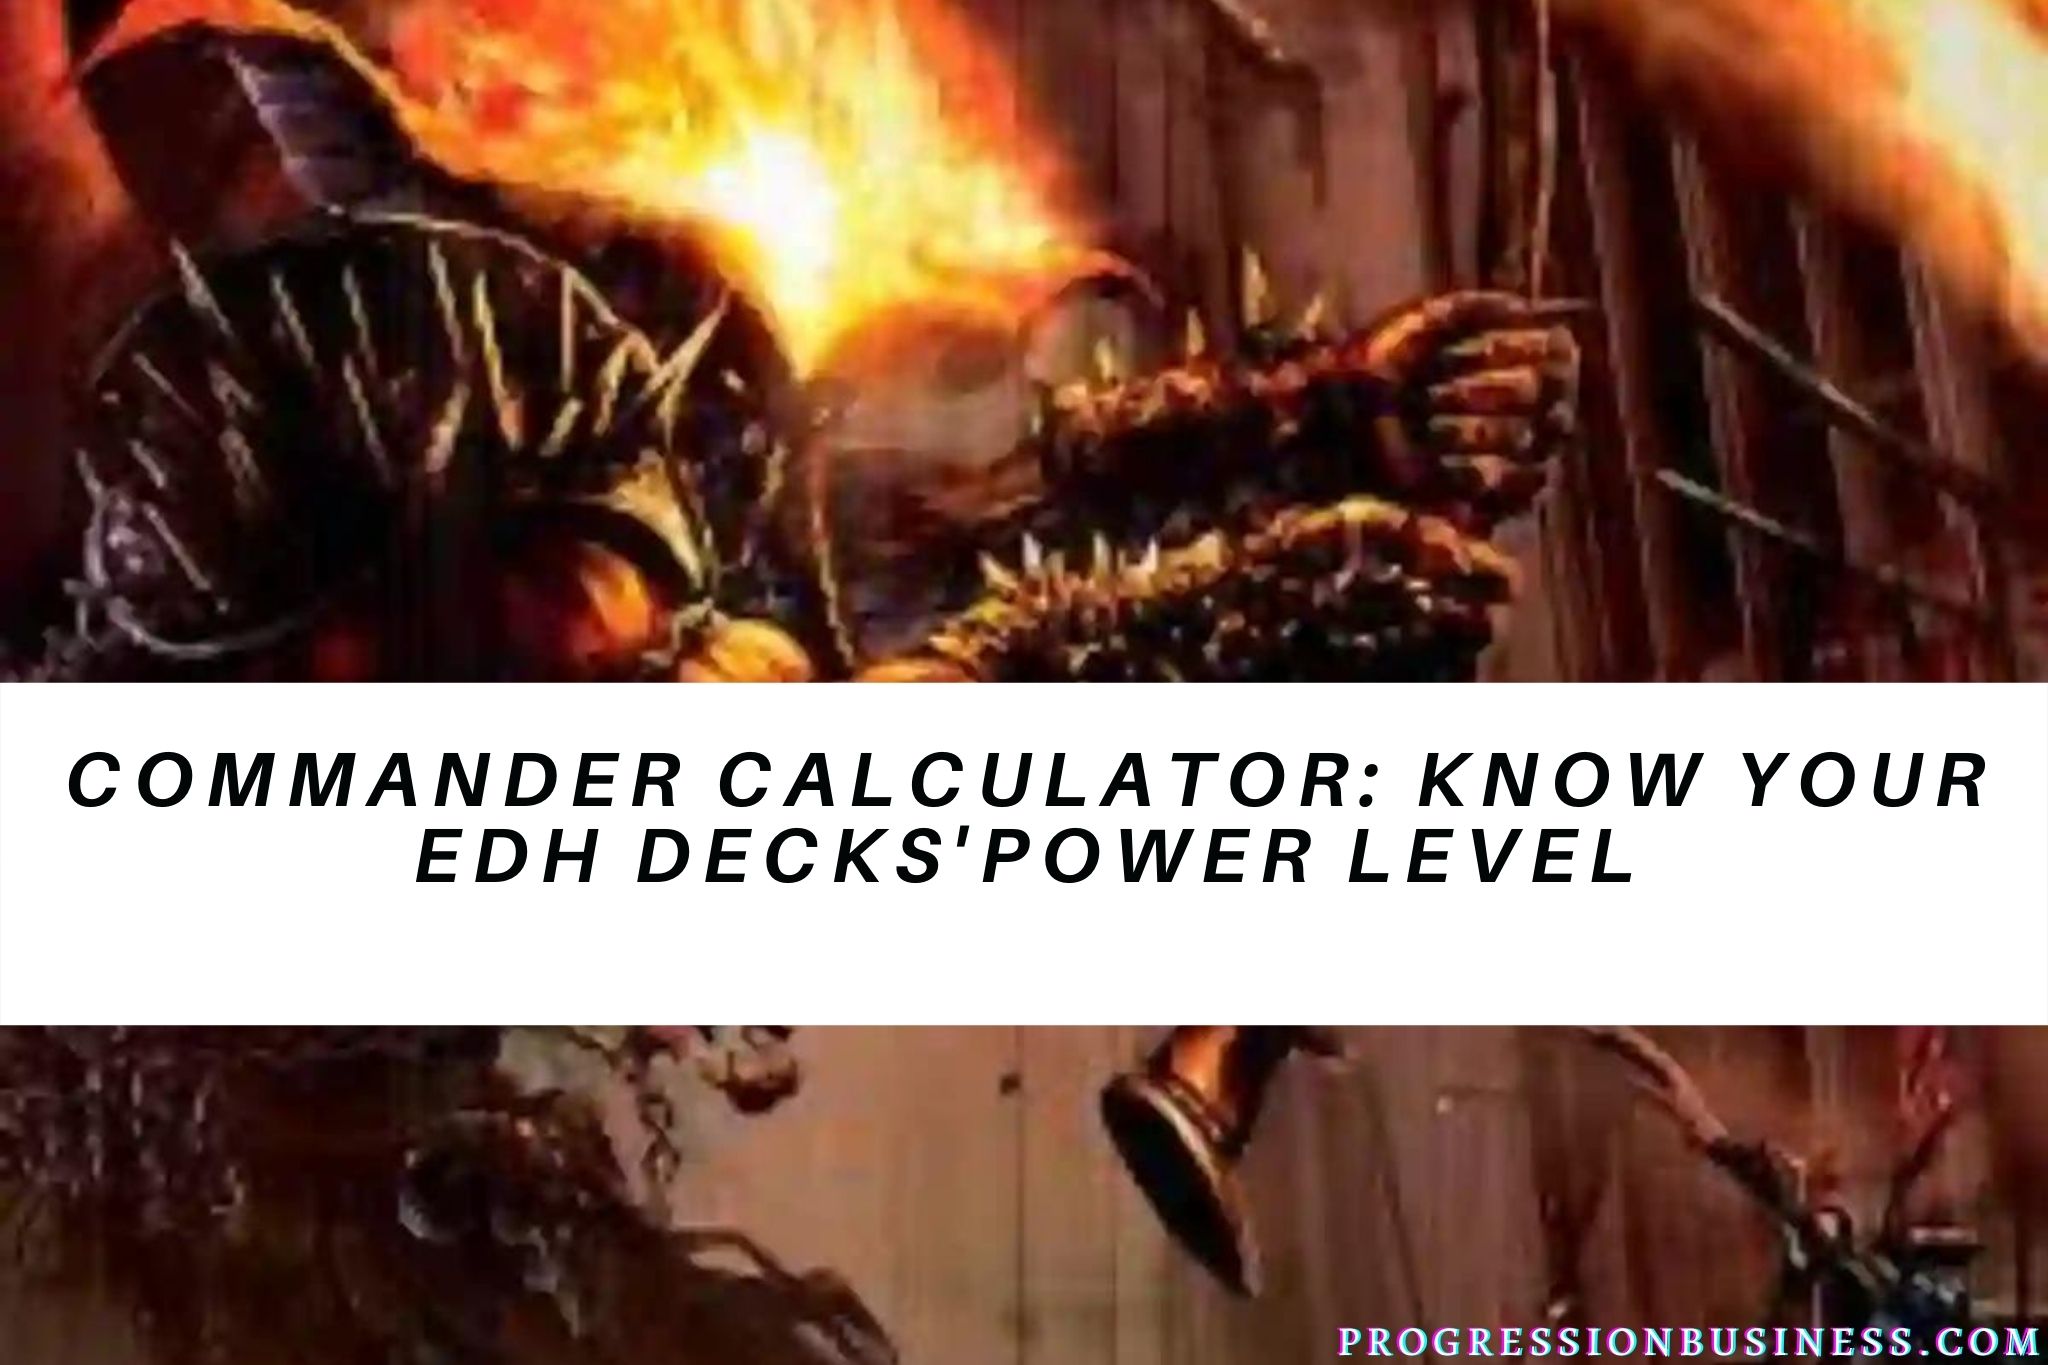 Commander Calculator: Know Your EDH Decks'Power Level